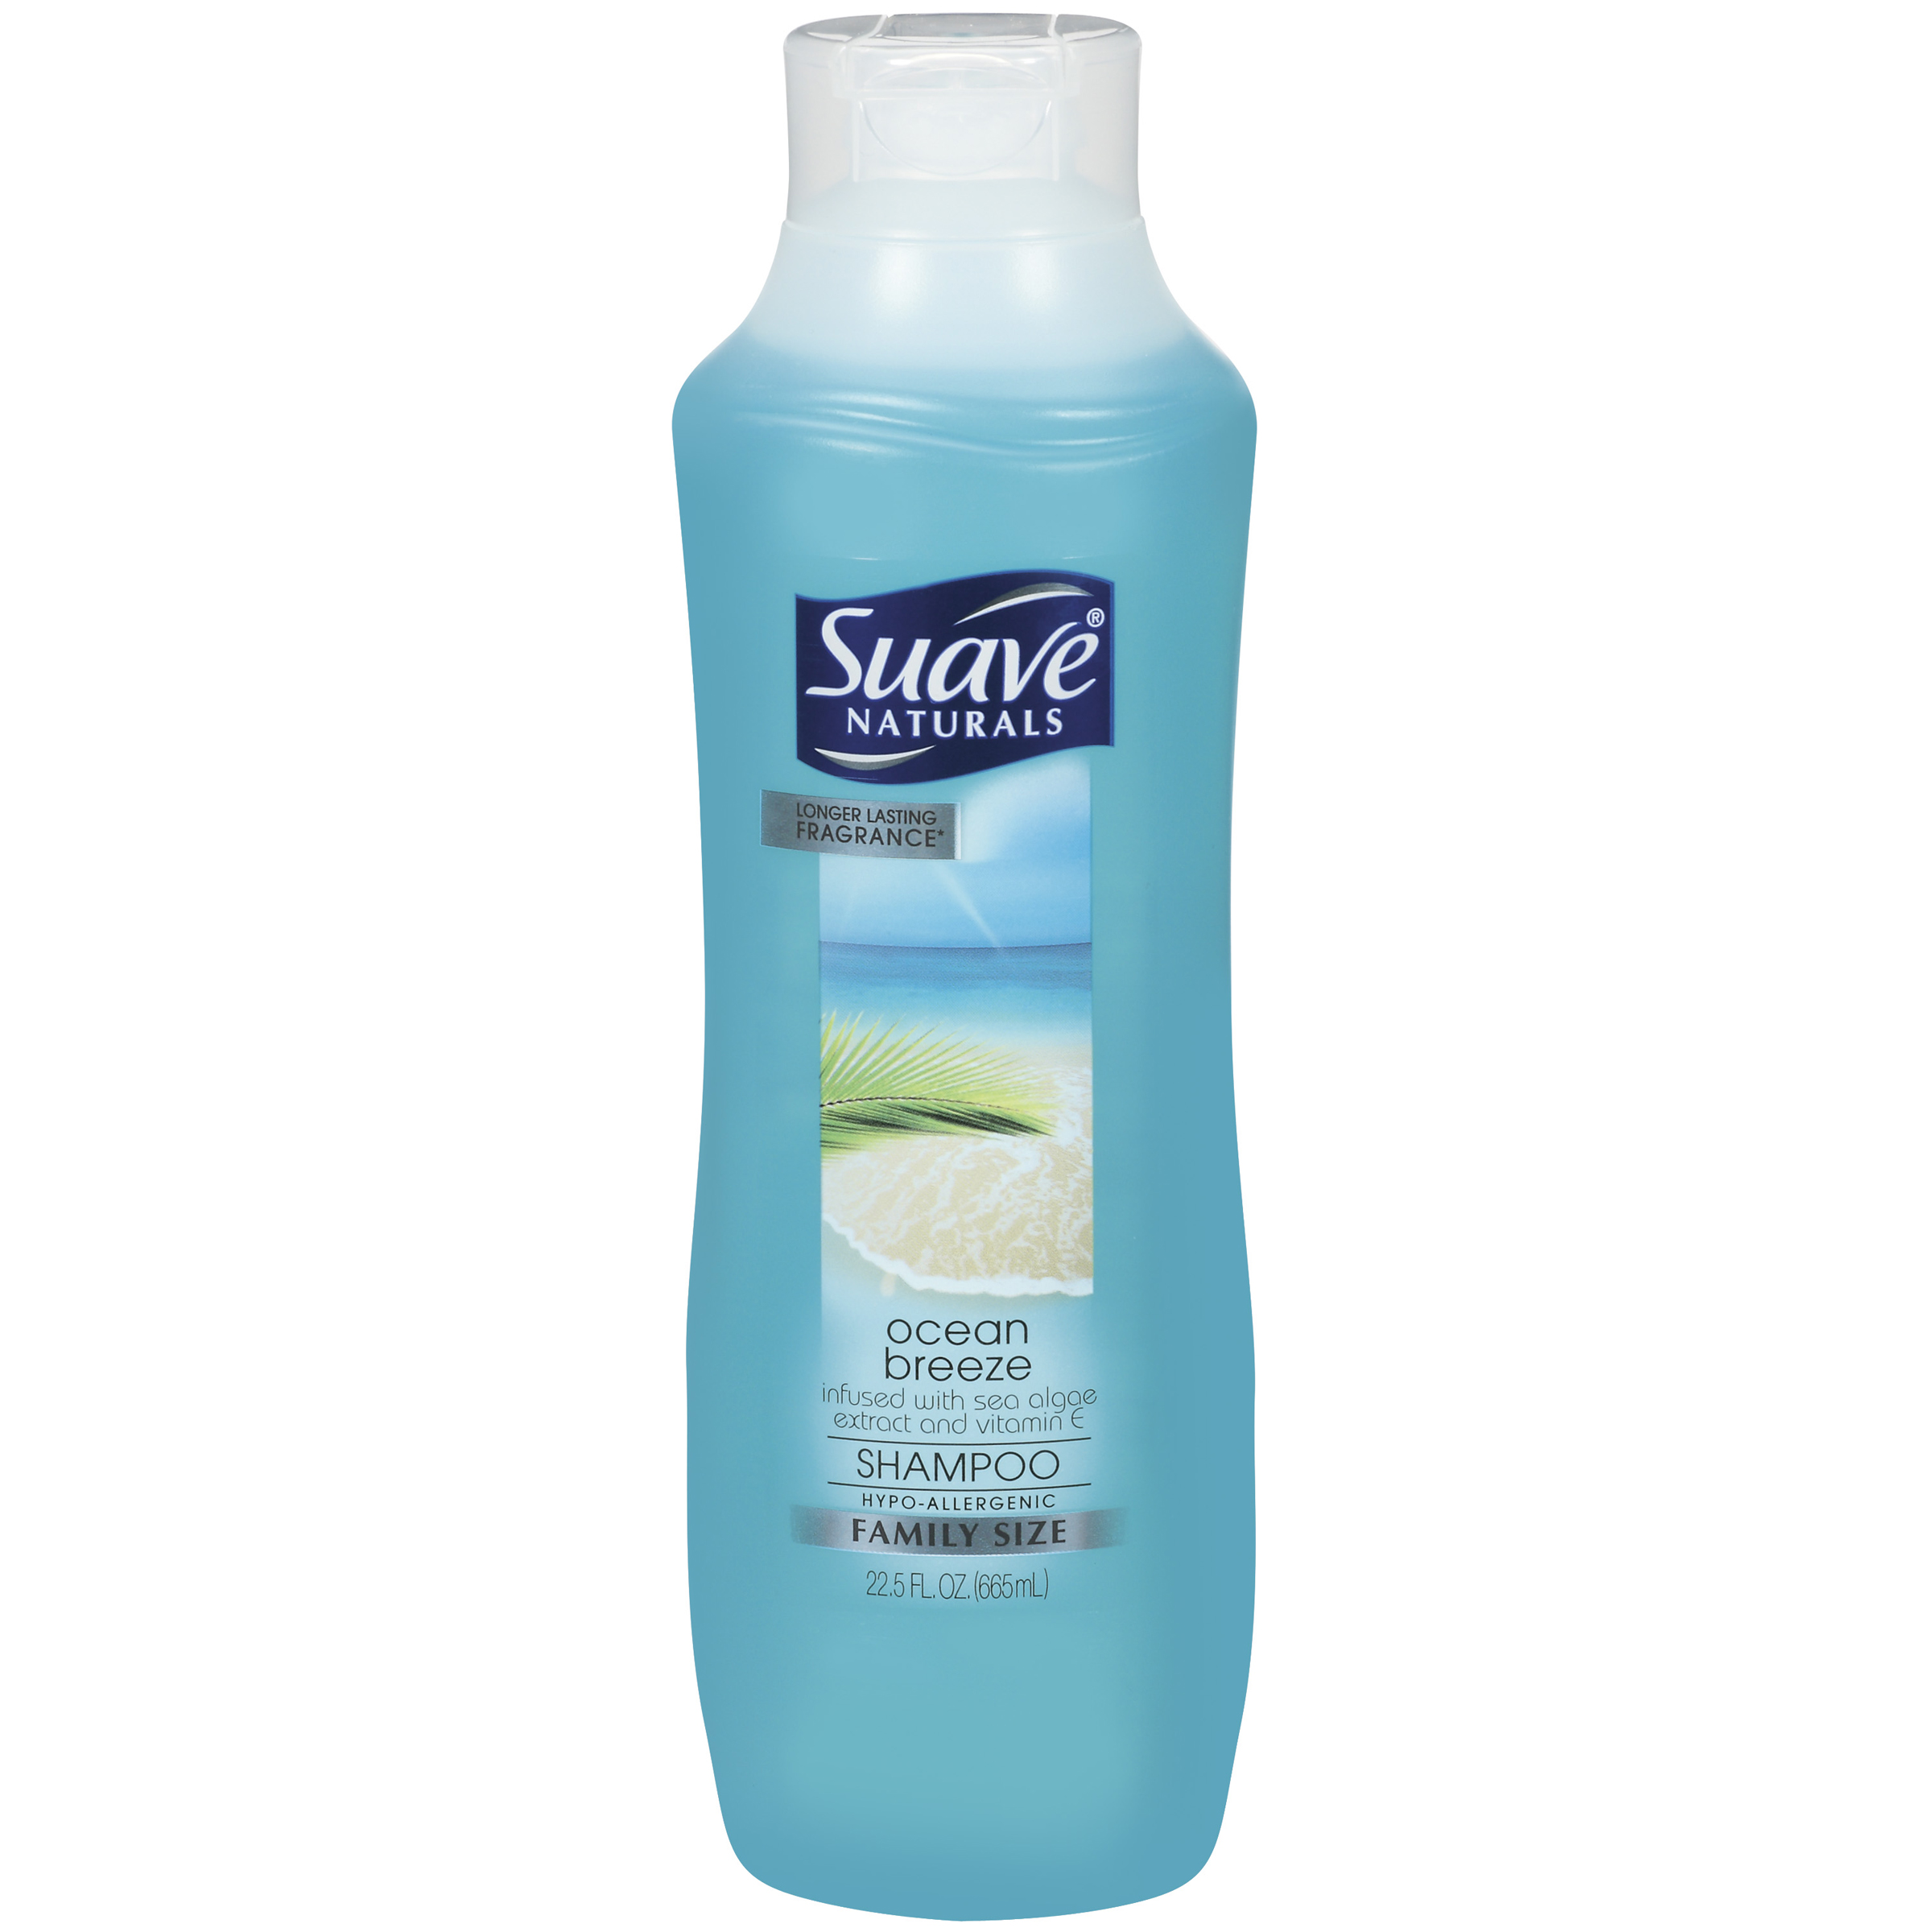 Suave Naturals Shampoo, Ocean Breeze, Family Size, 22.5 fl oz (665 ml)